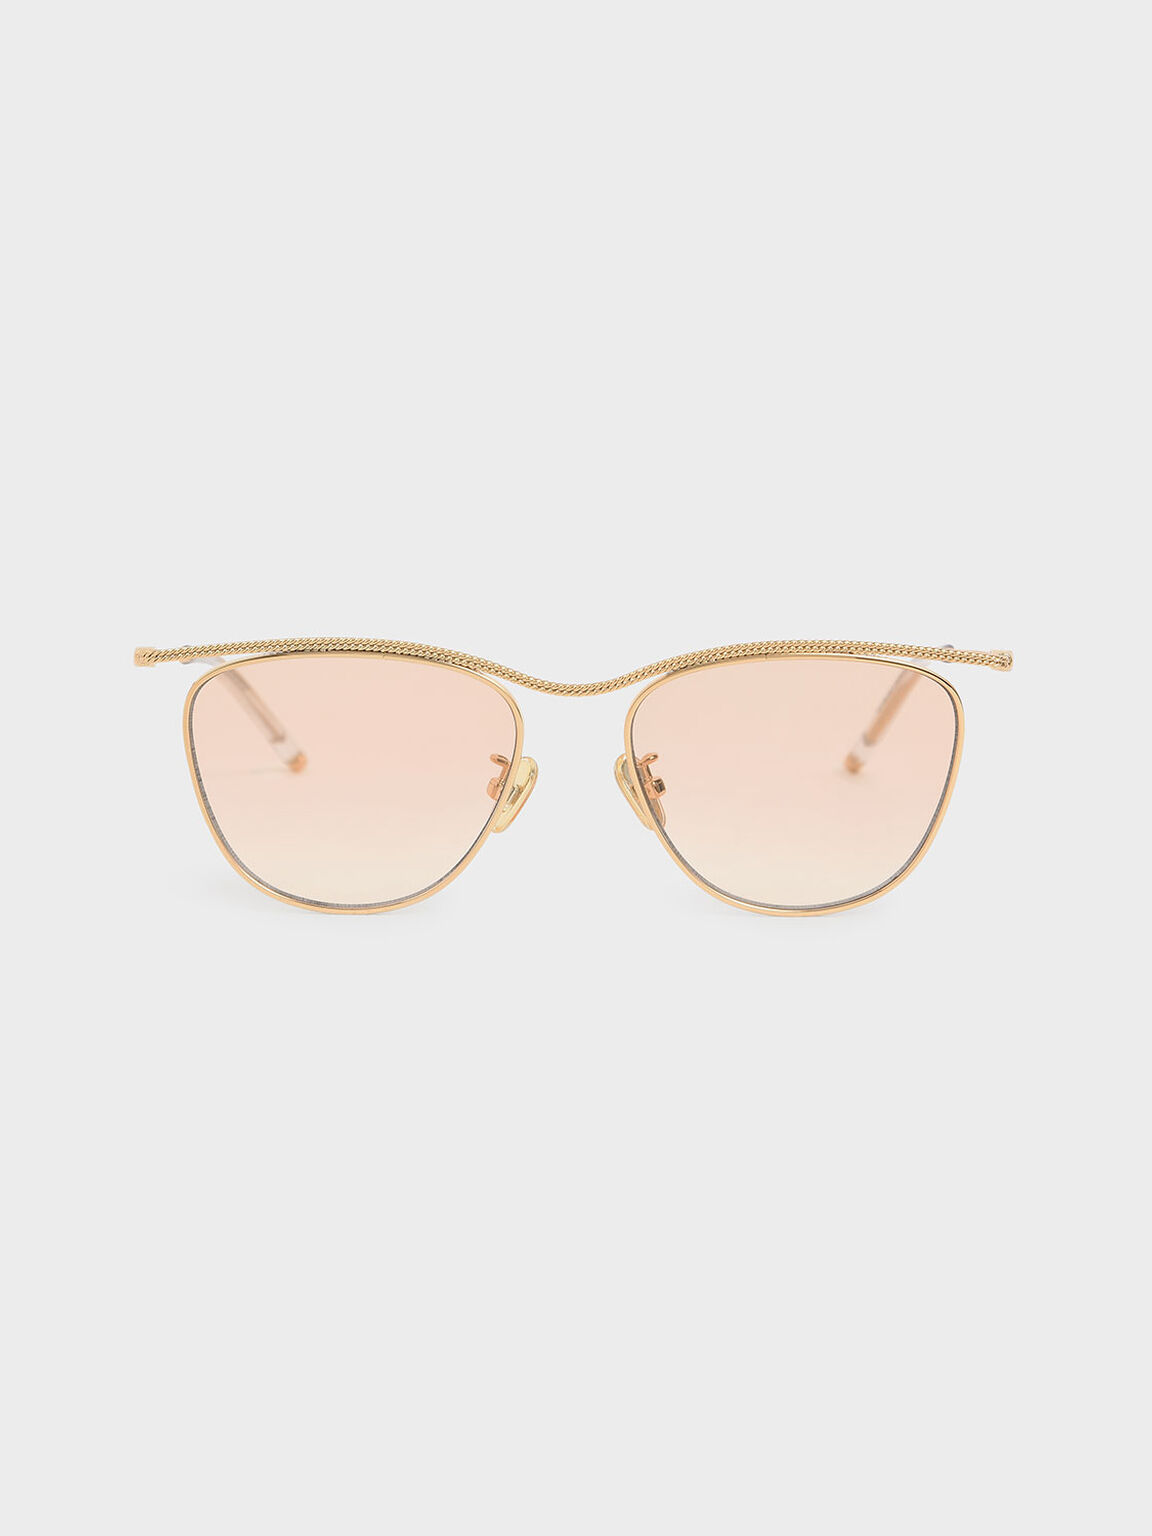 Wireframe Tinted Sunglasses, Orange, hi-res